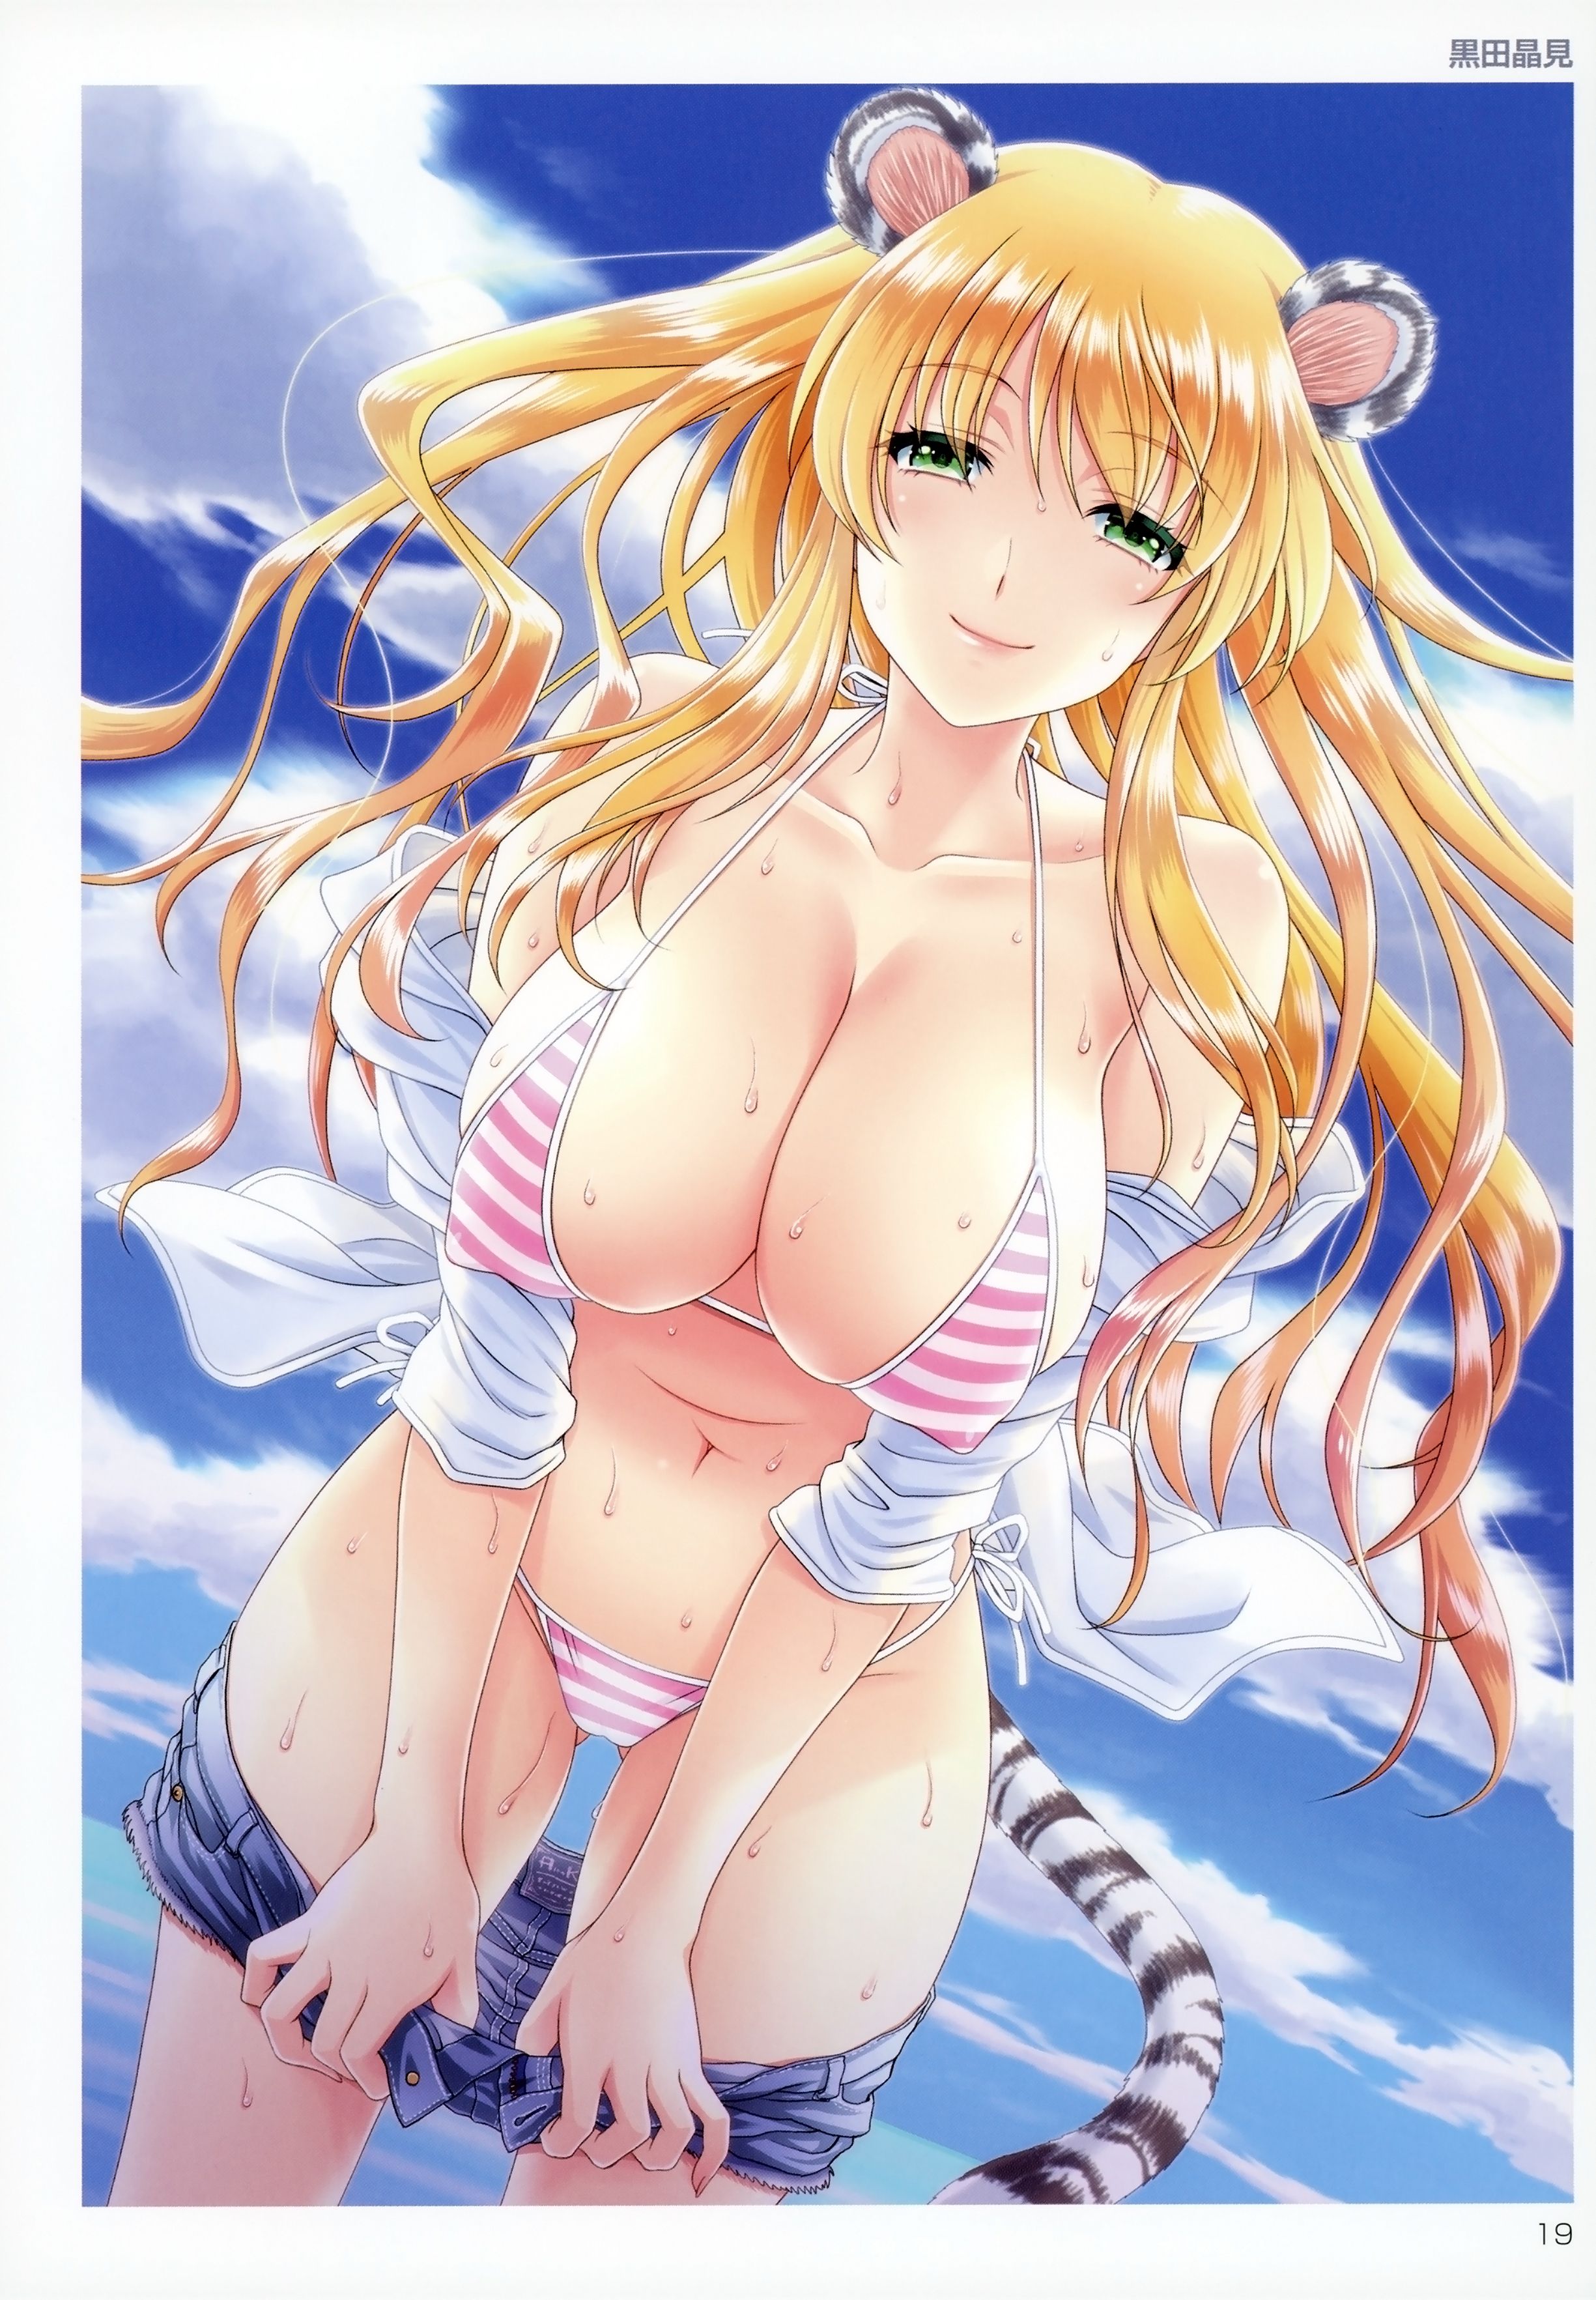 Erotic anime summary erotic images of beautiful girls wearing striped bikinis [50 photos] 10